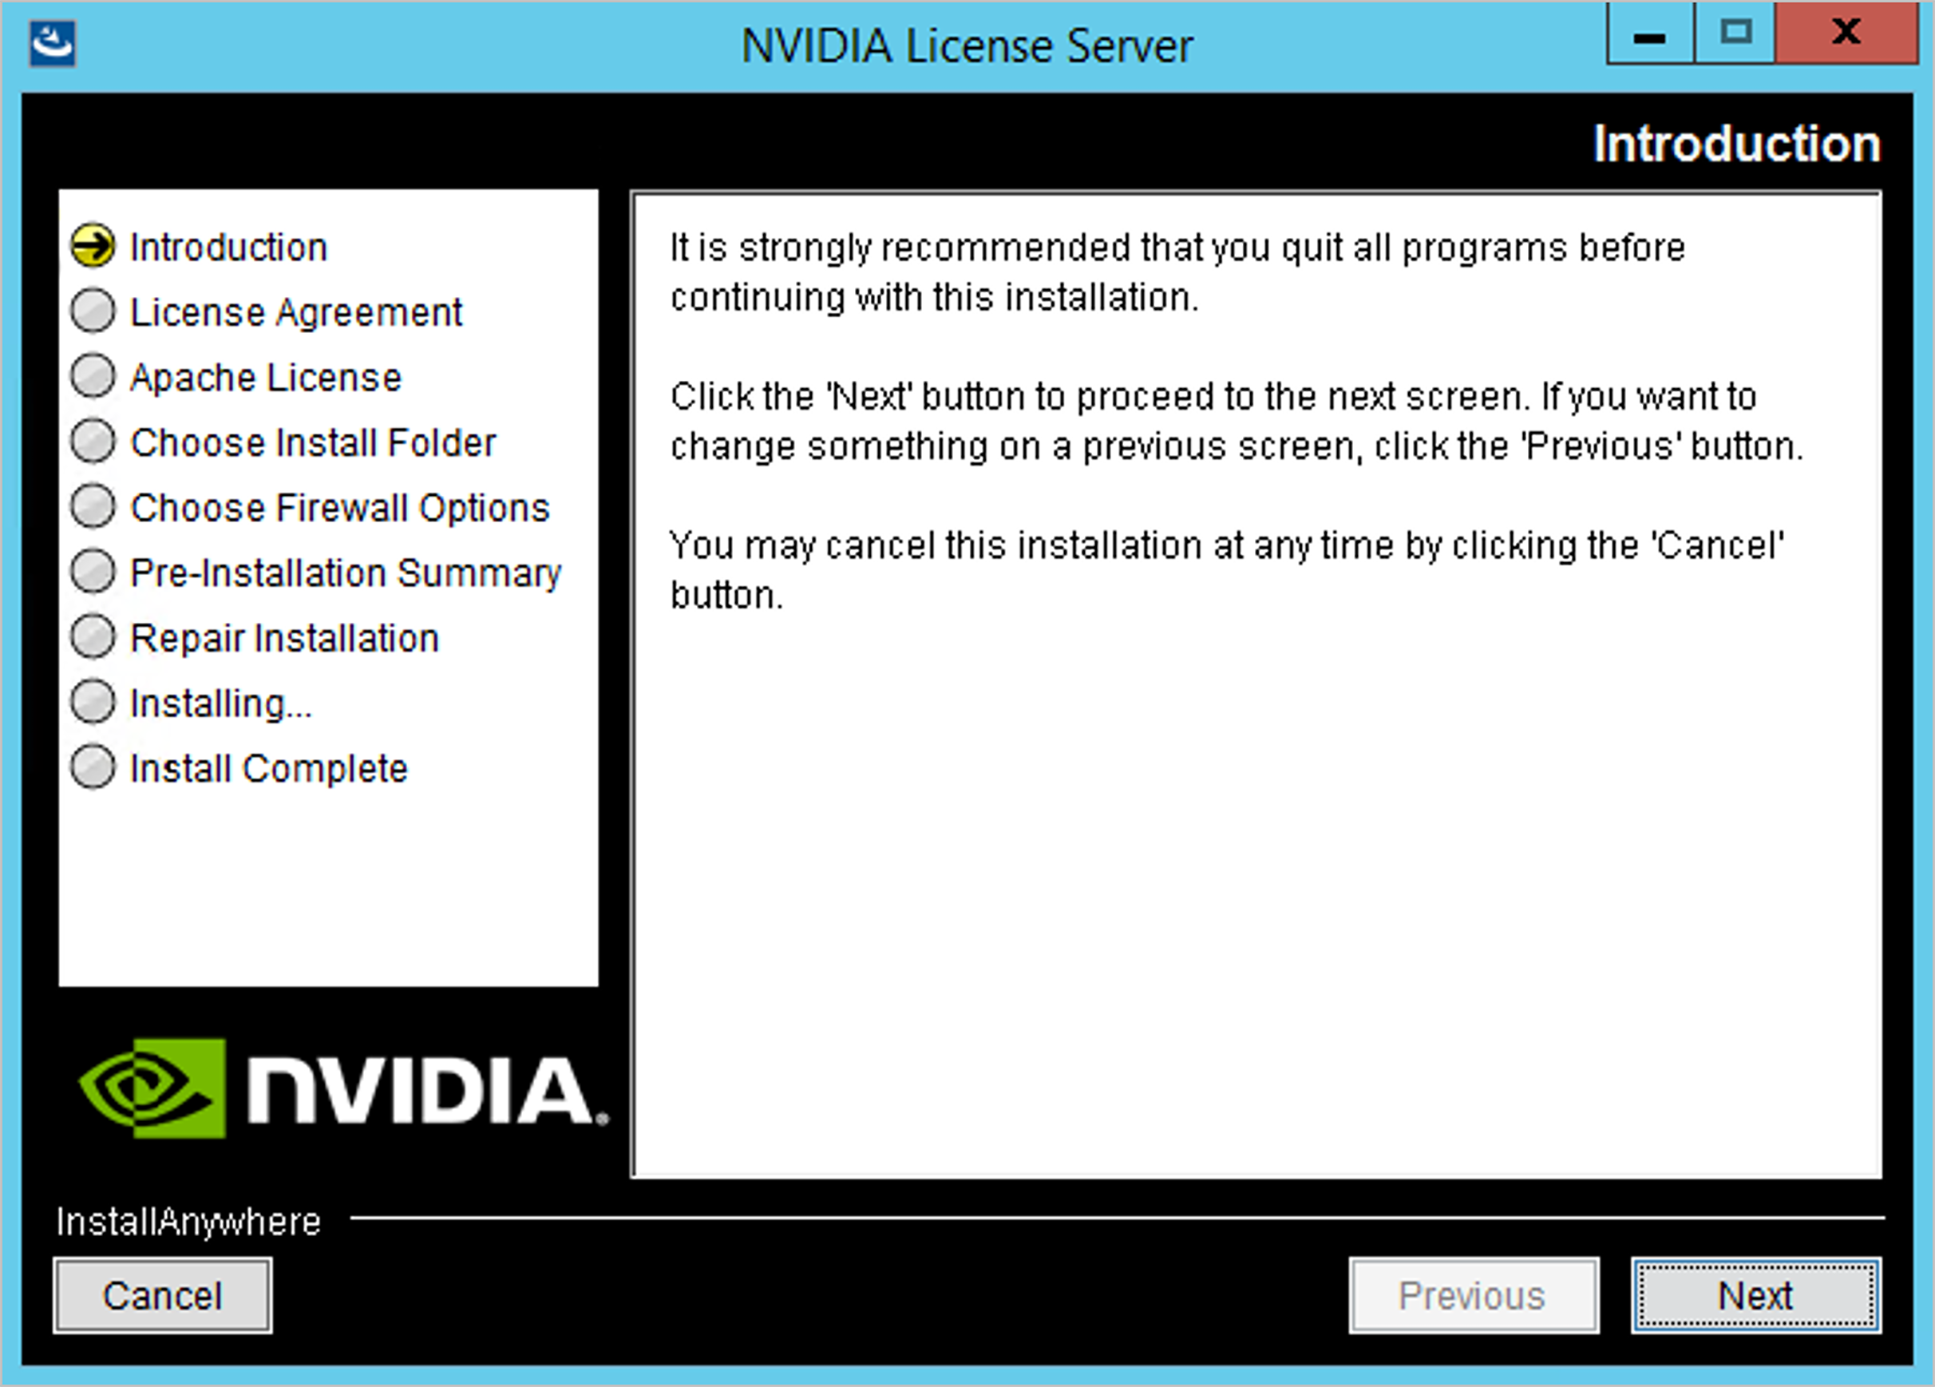 NVIDIA License Server screen